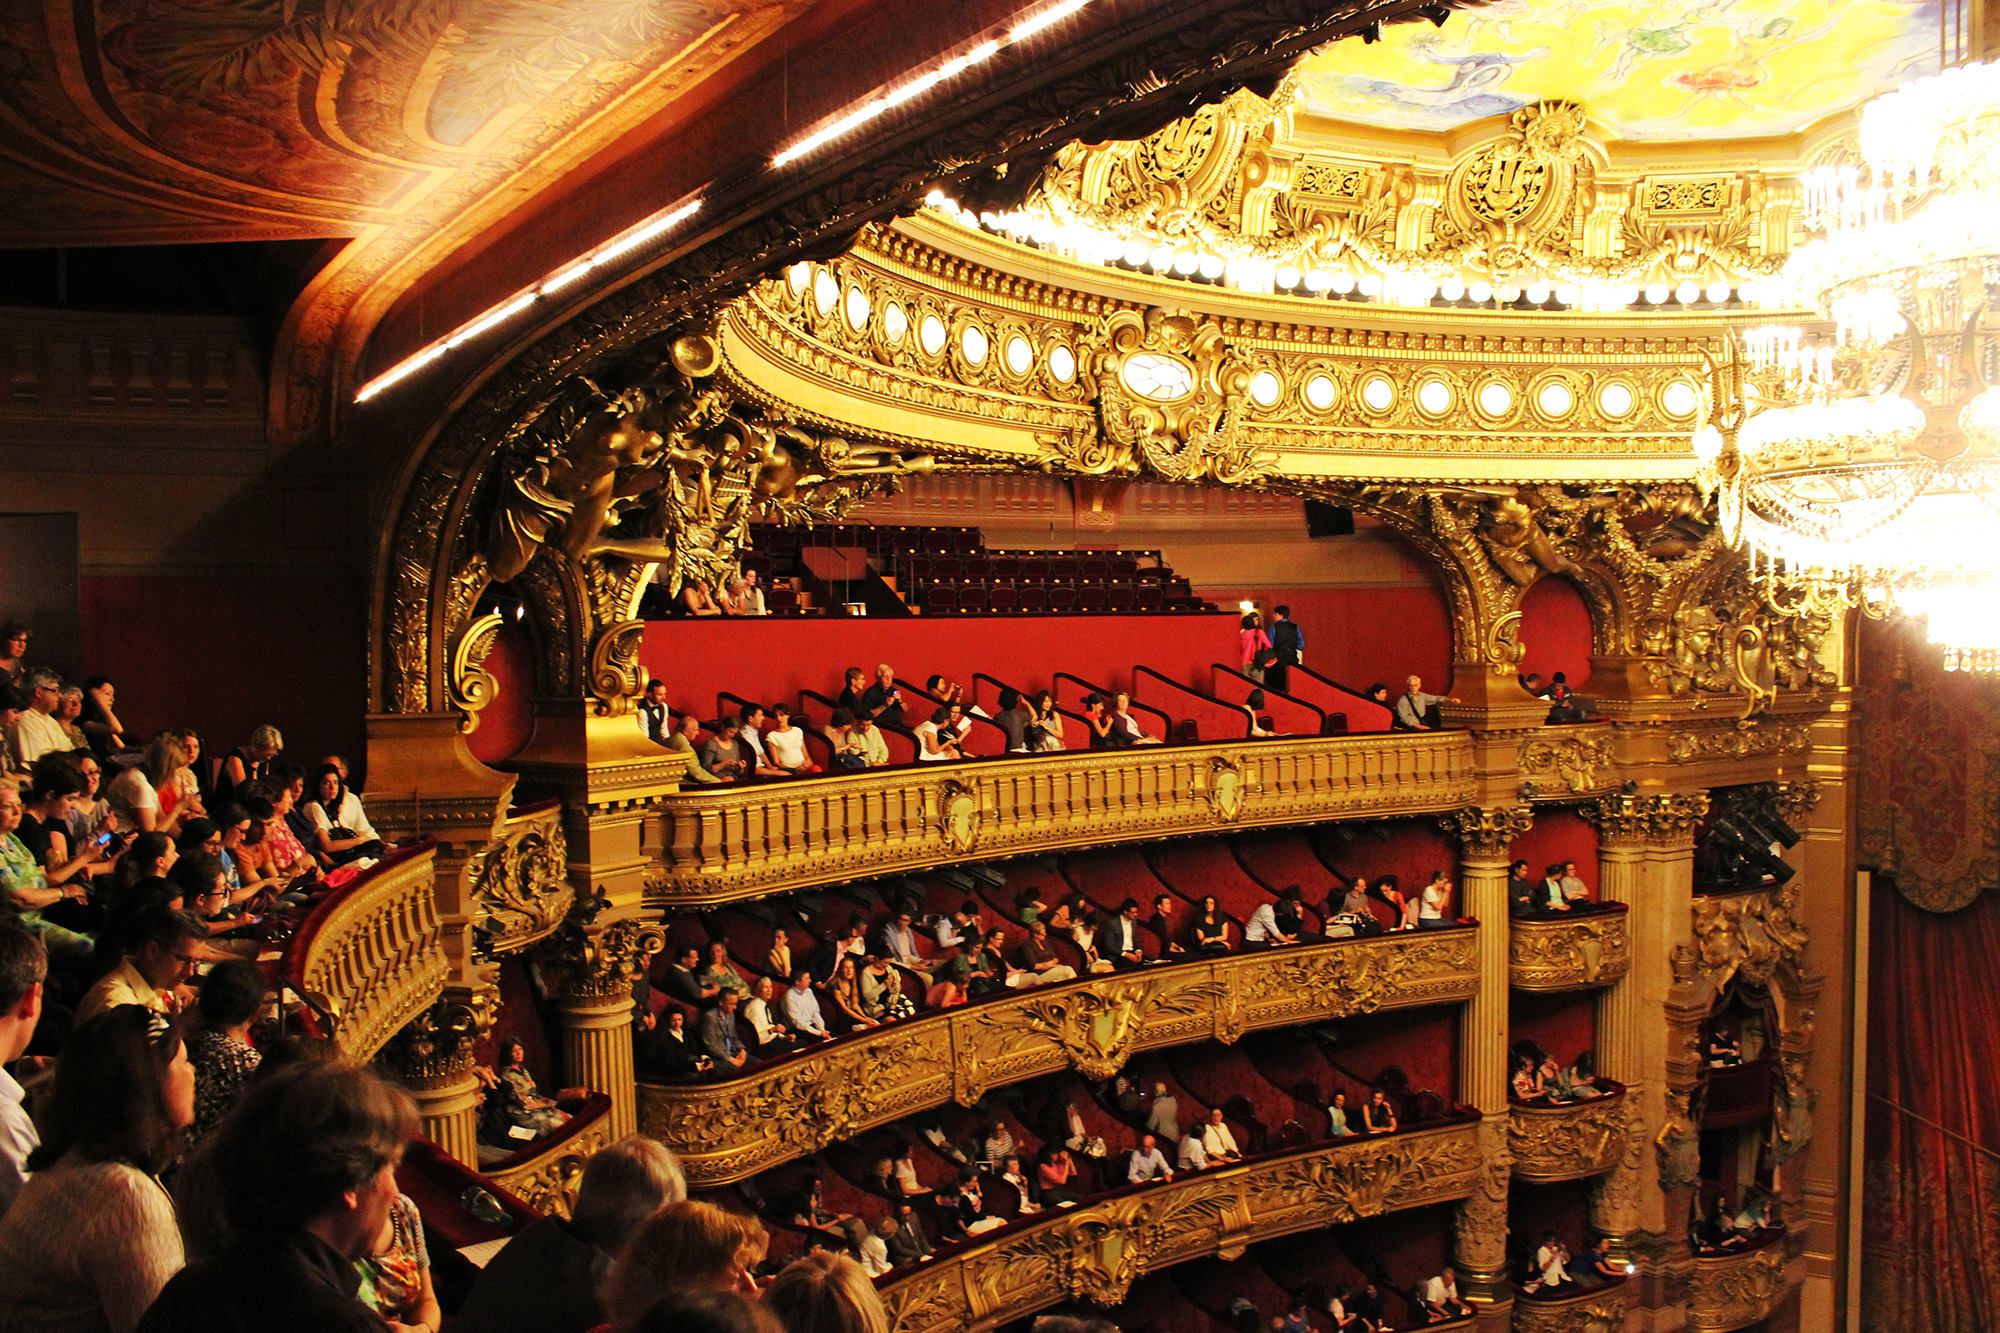 Inside L'Opera at La Palais Garnier.